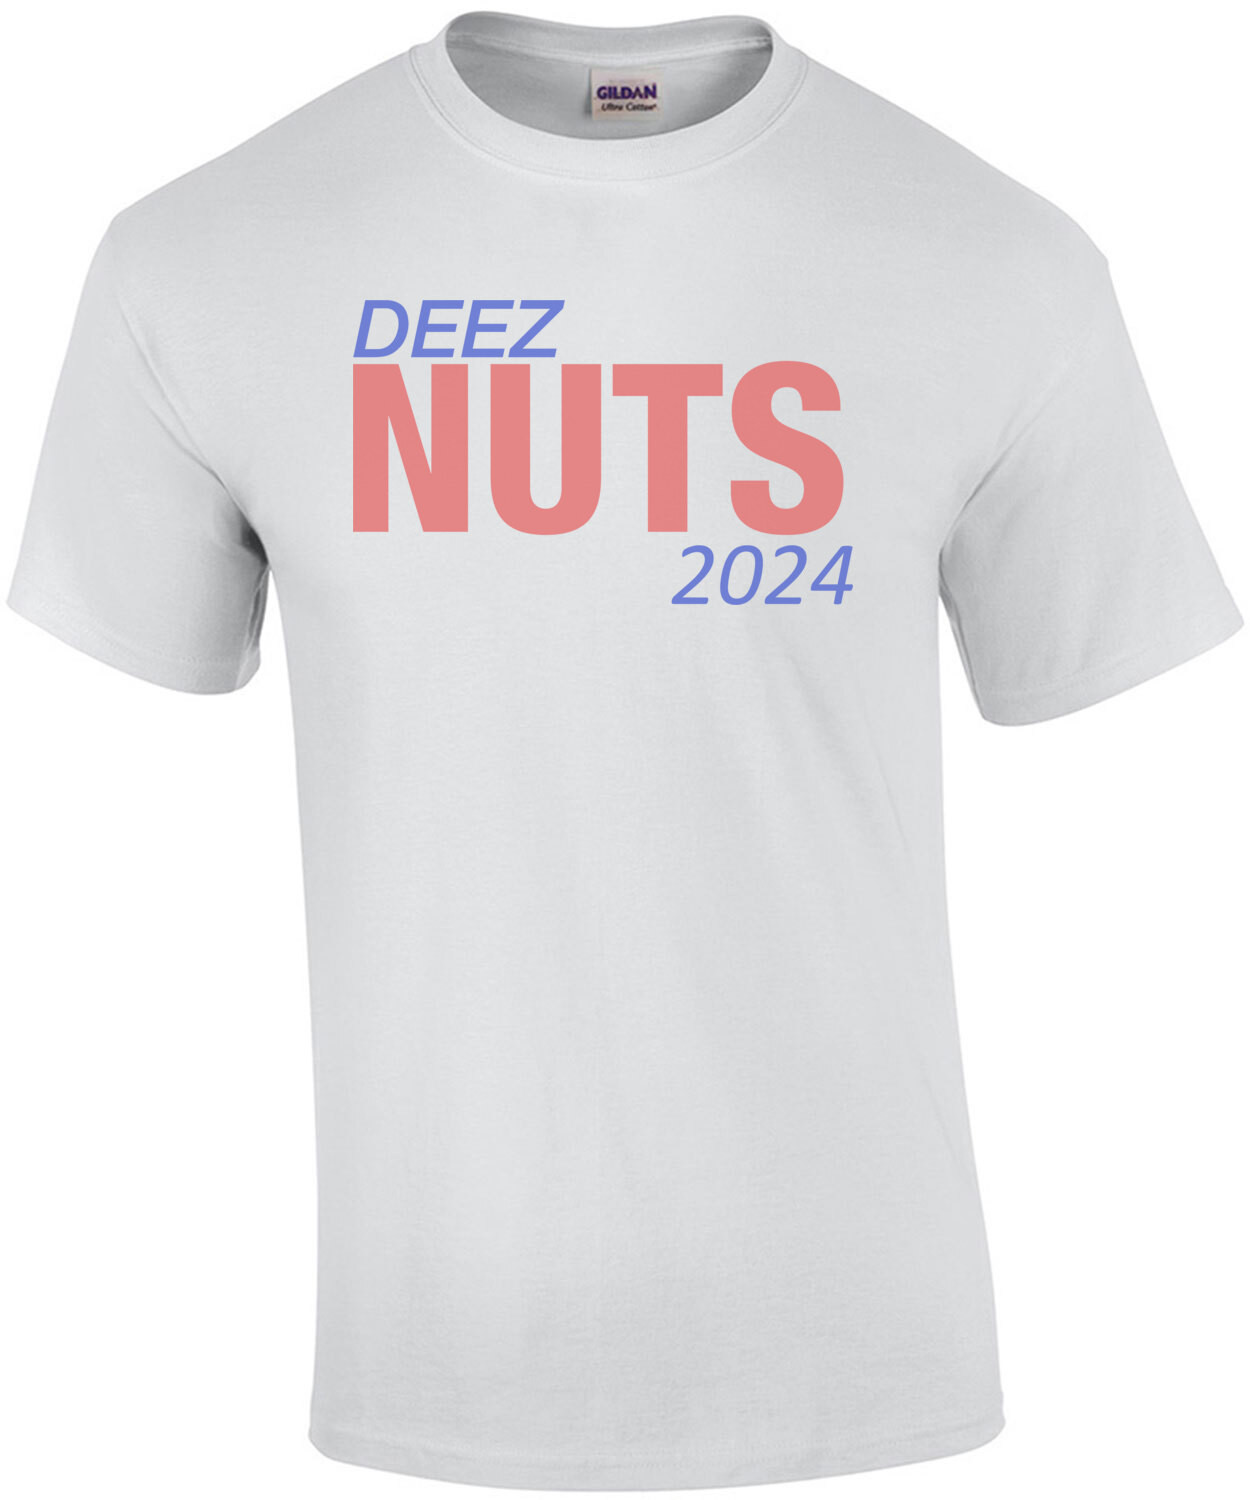 Deez Nuts 2024 Shirt